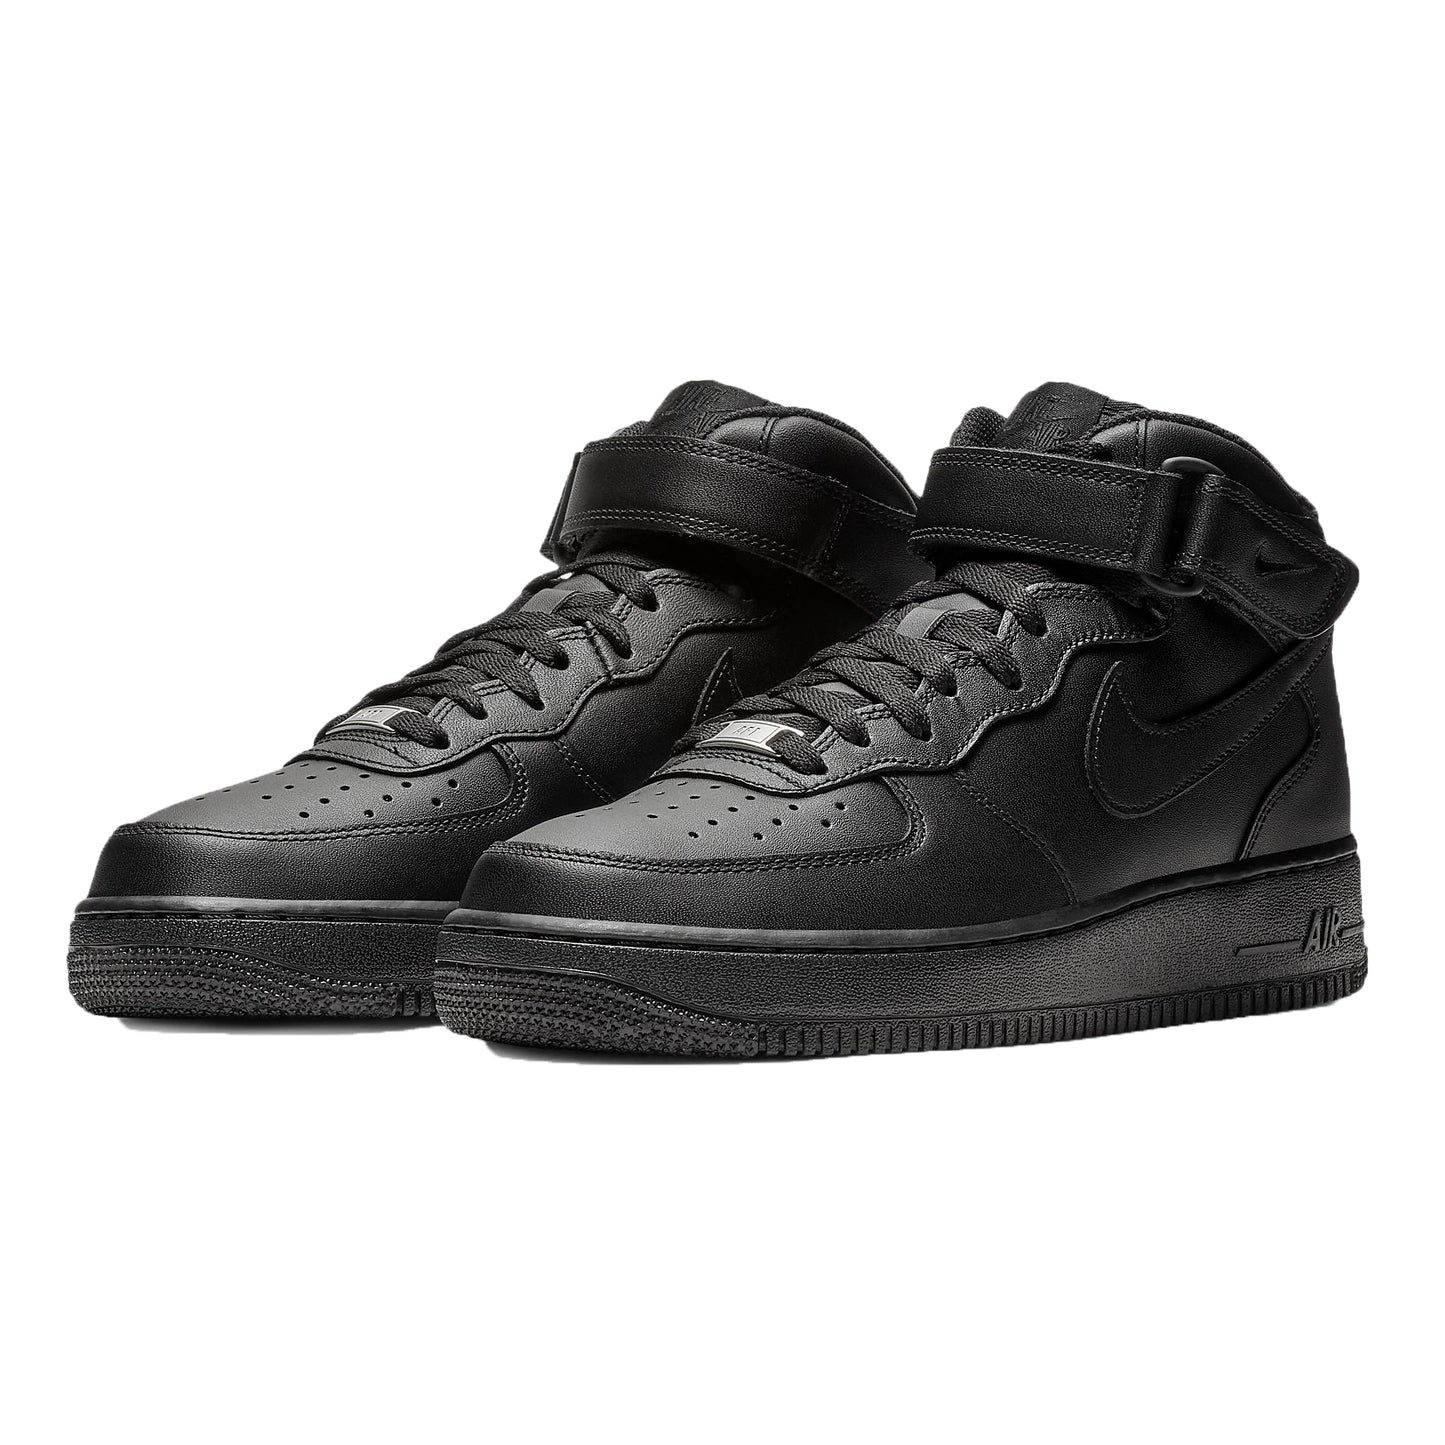 Nike Air Force 1 Mid '07 Black (315123-001)